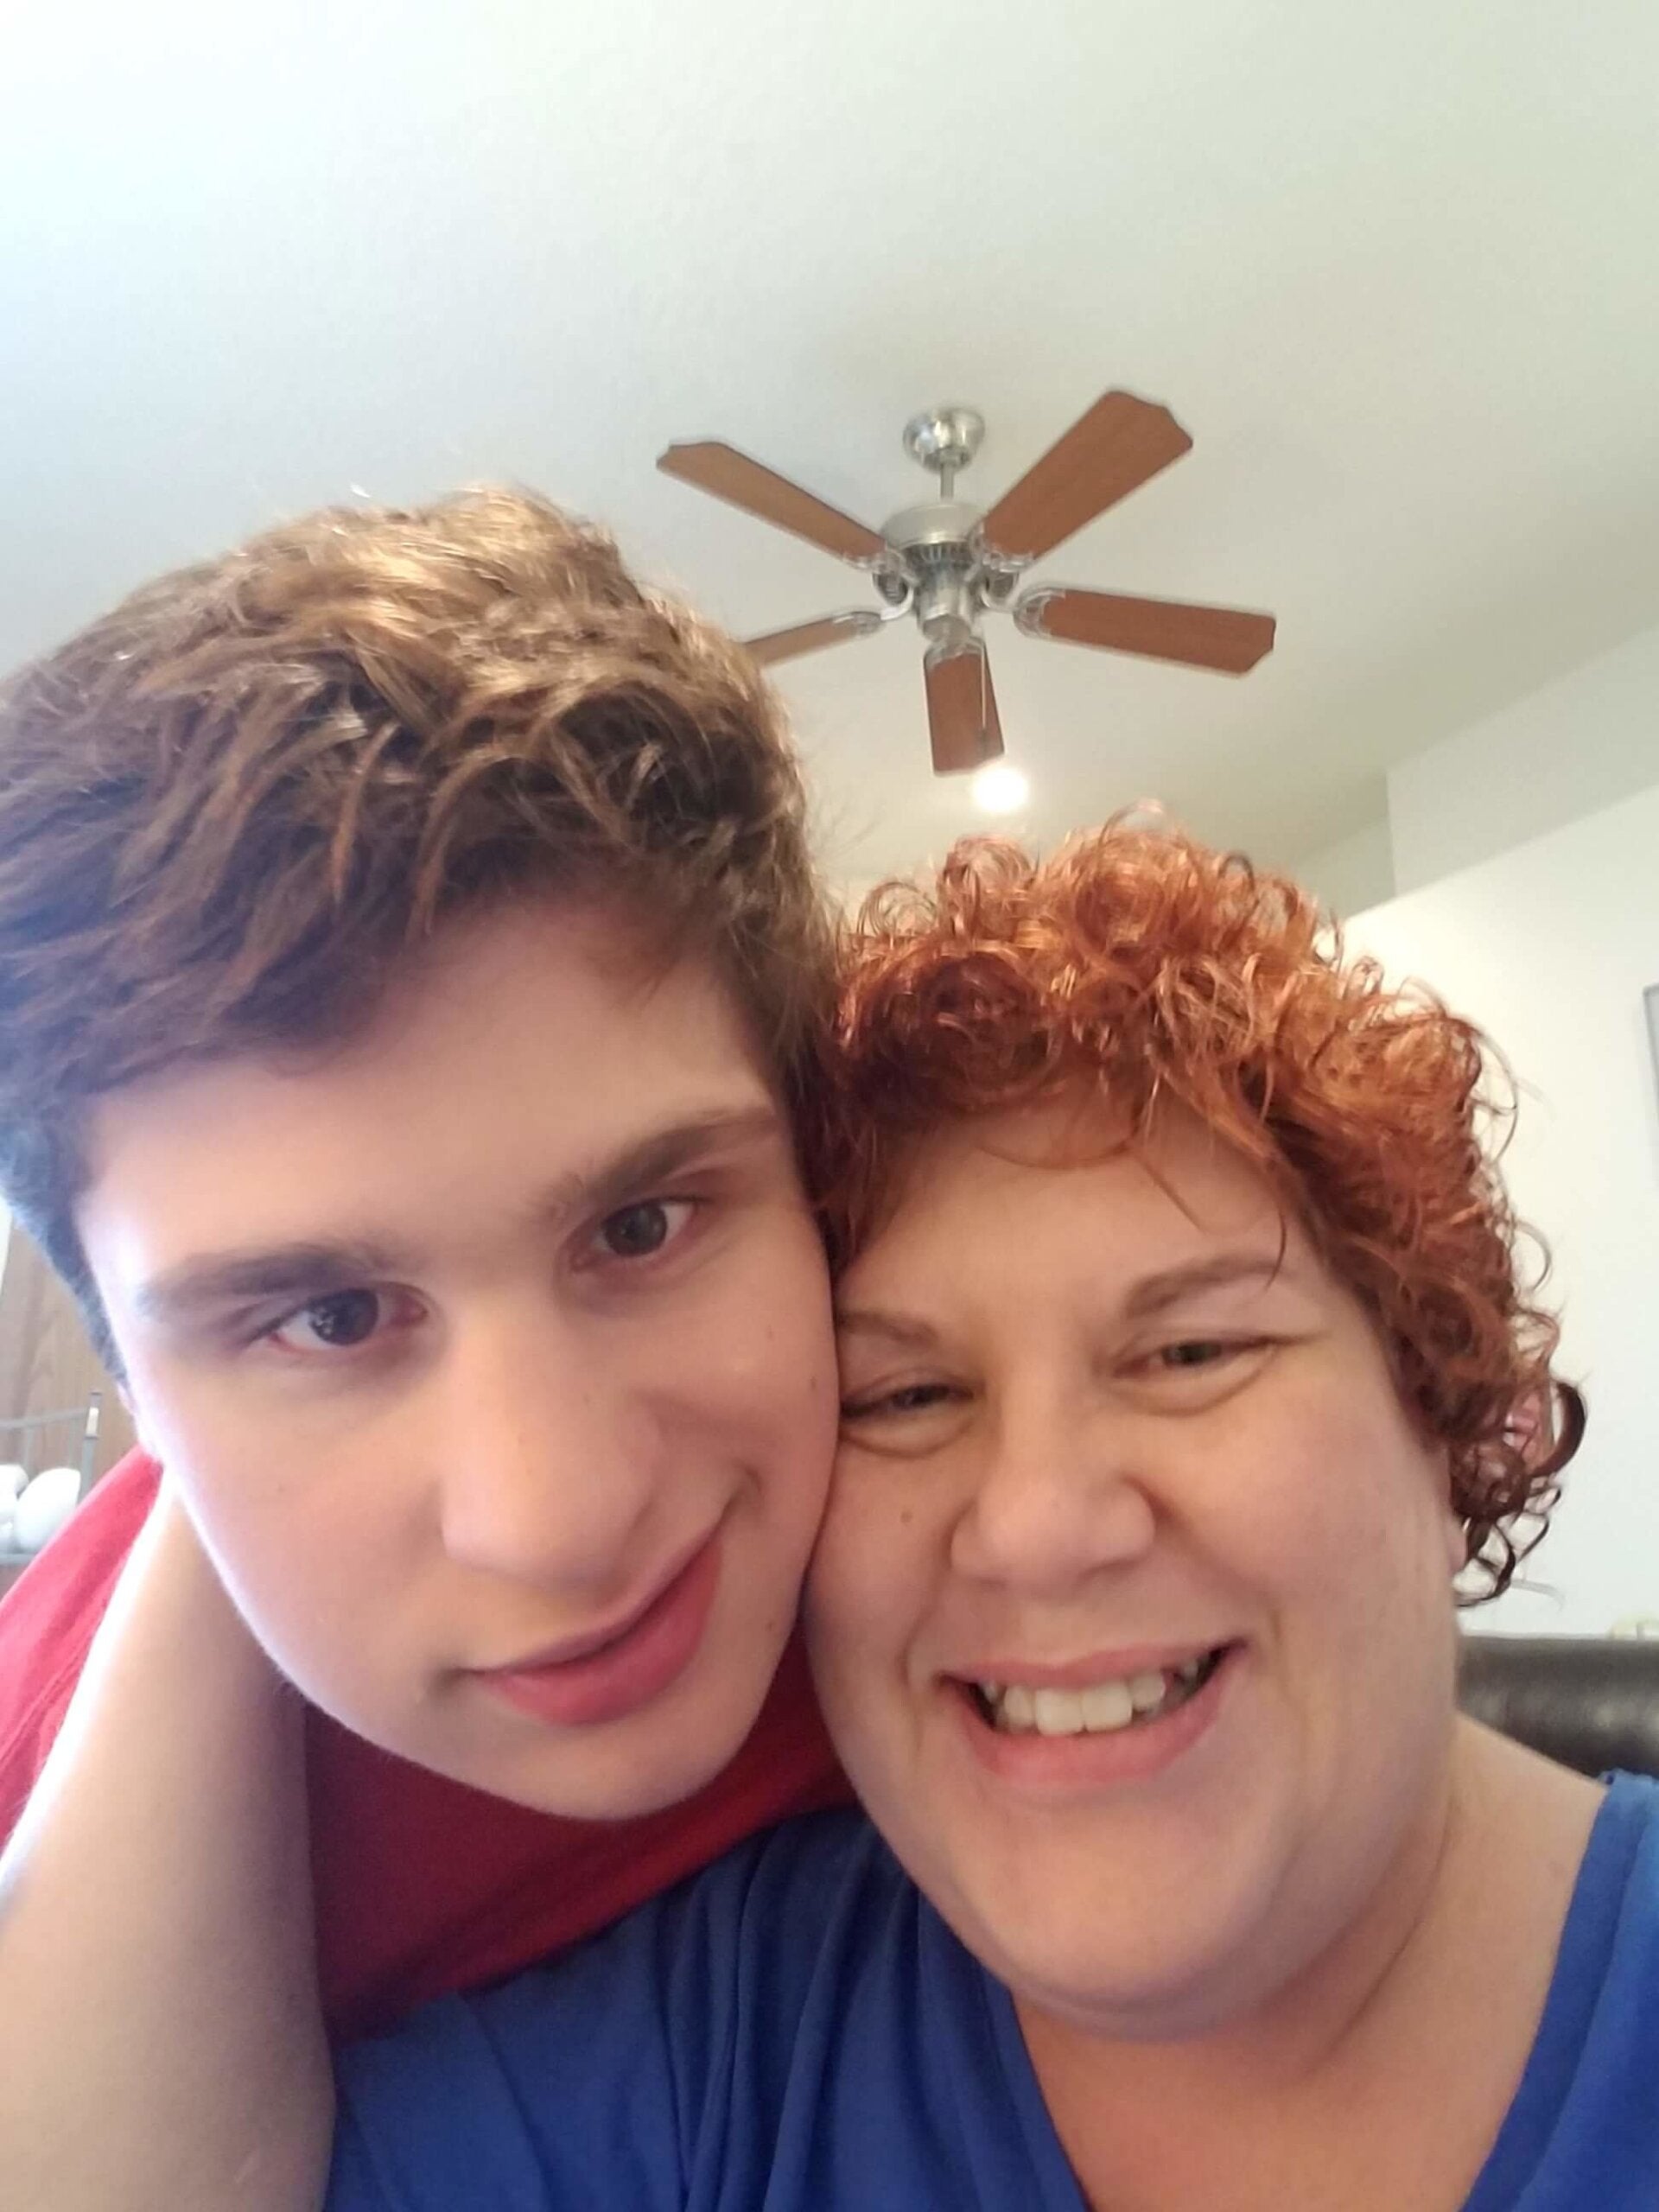 Ian and his mom